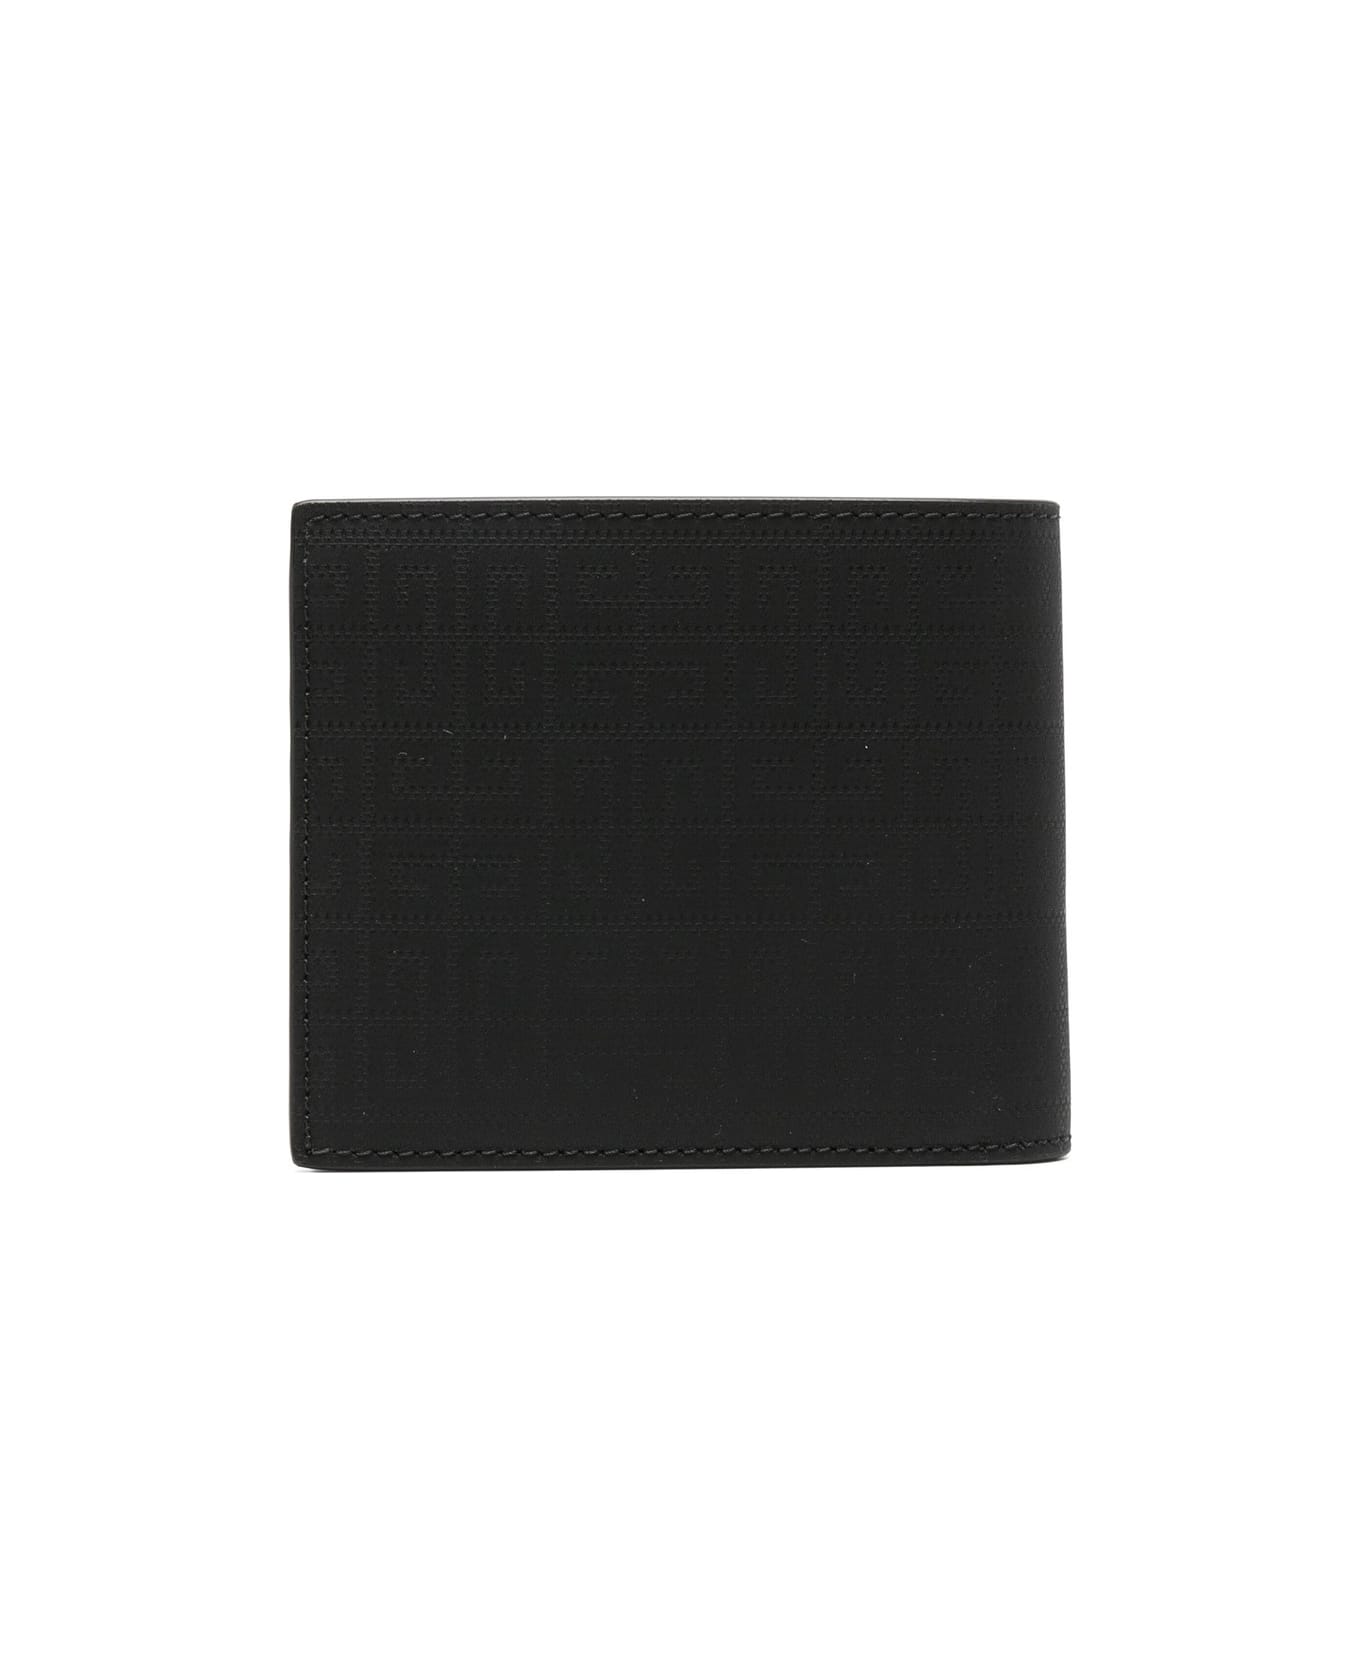 Givenchy Wallet In Black 4g Nylon - Black 財布